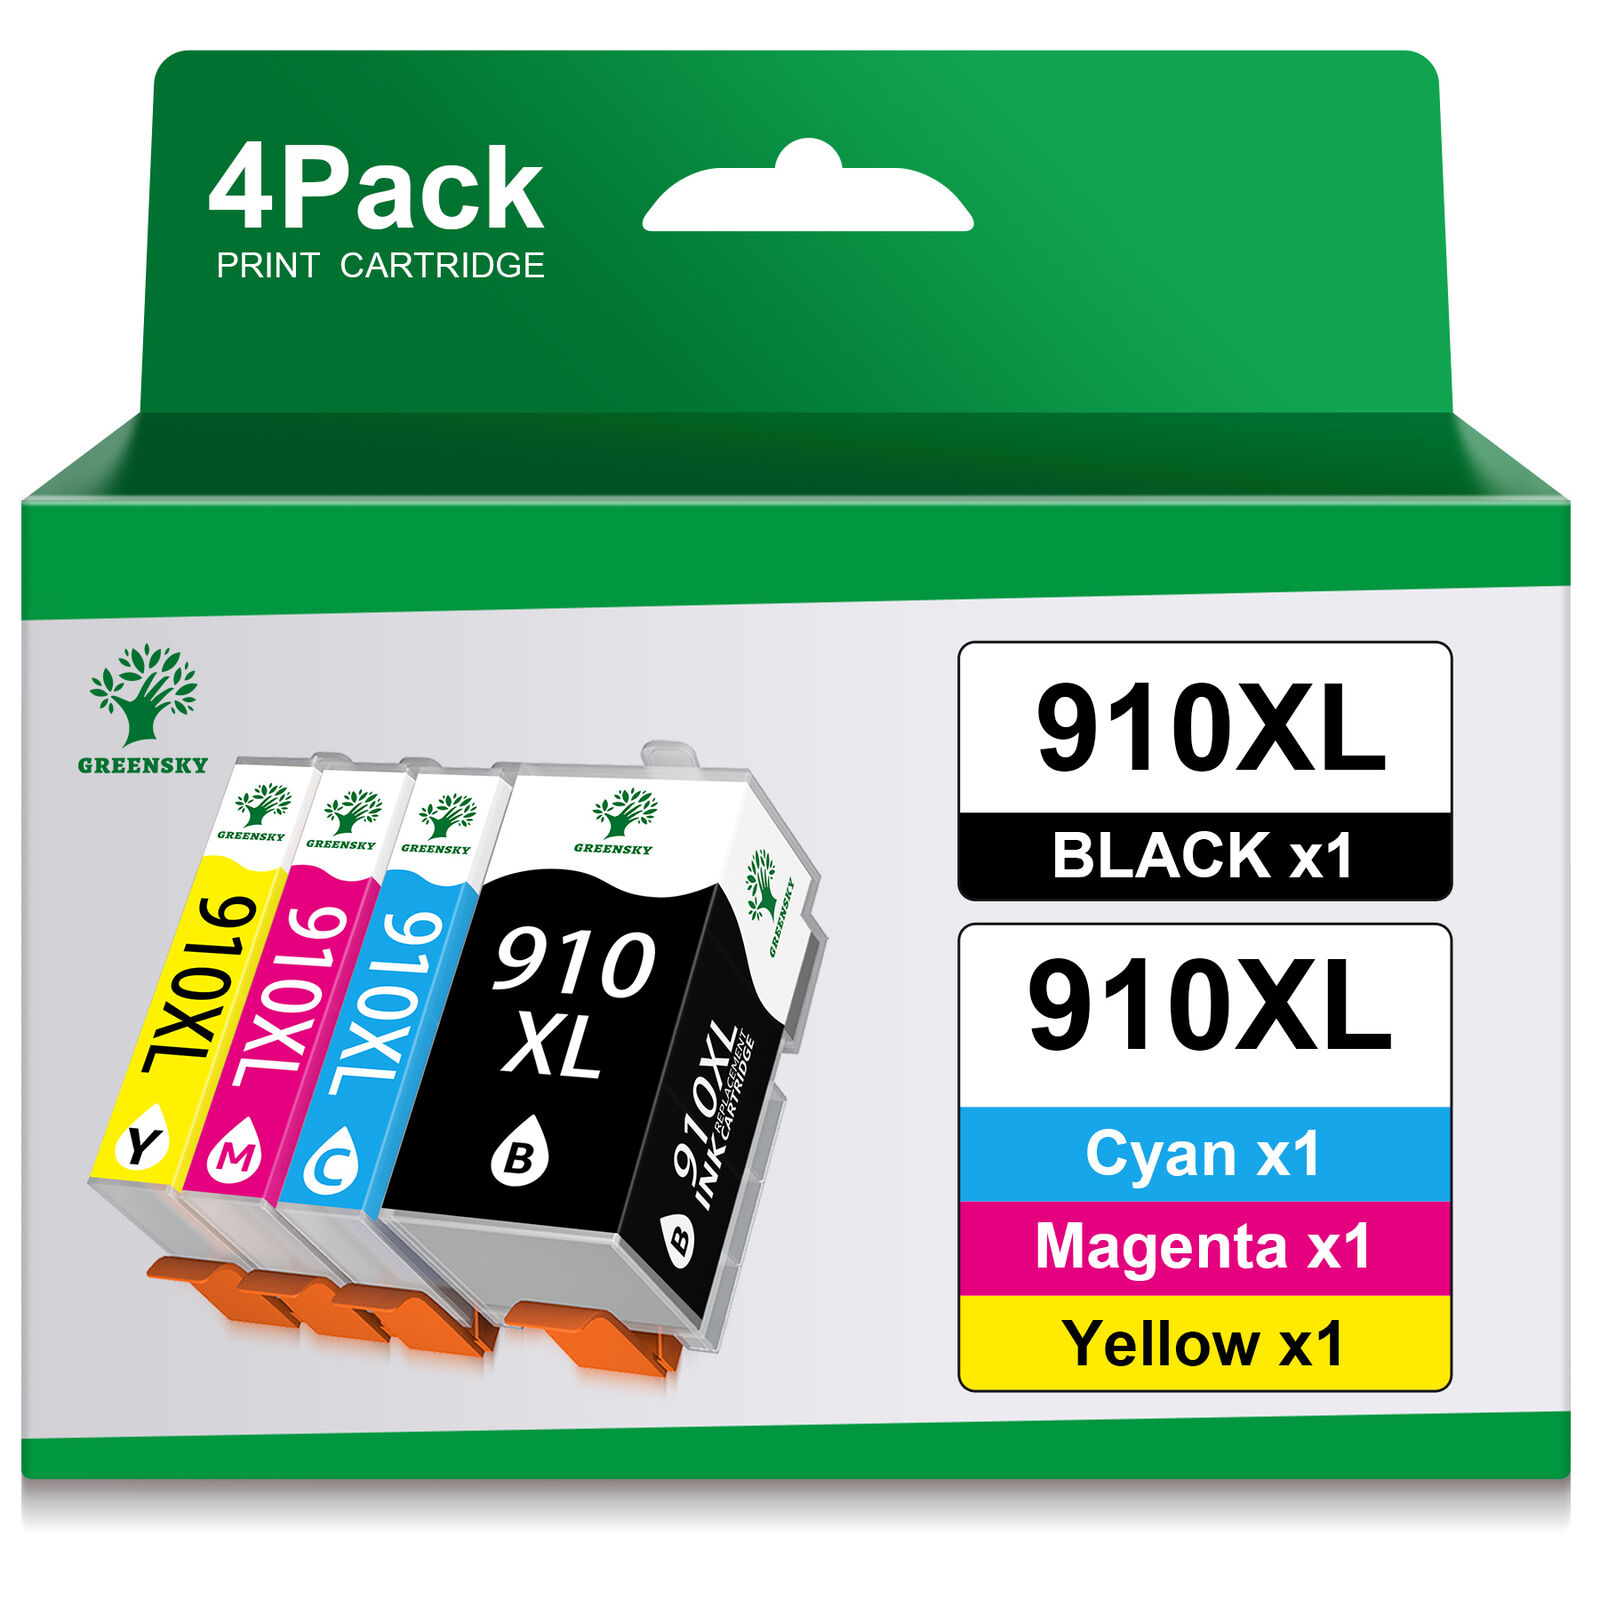 4 Pack 910XL Ink for HP OfficeJet Pro 8020 8028 8025 OfficeJet 8022 8010 Printer